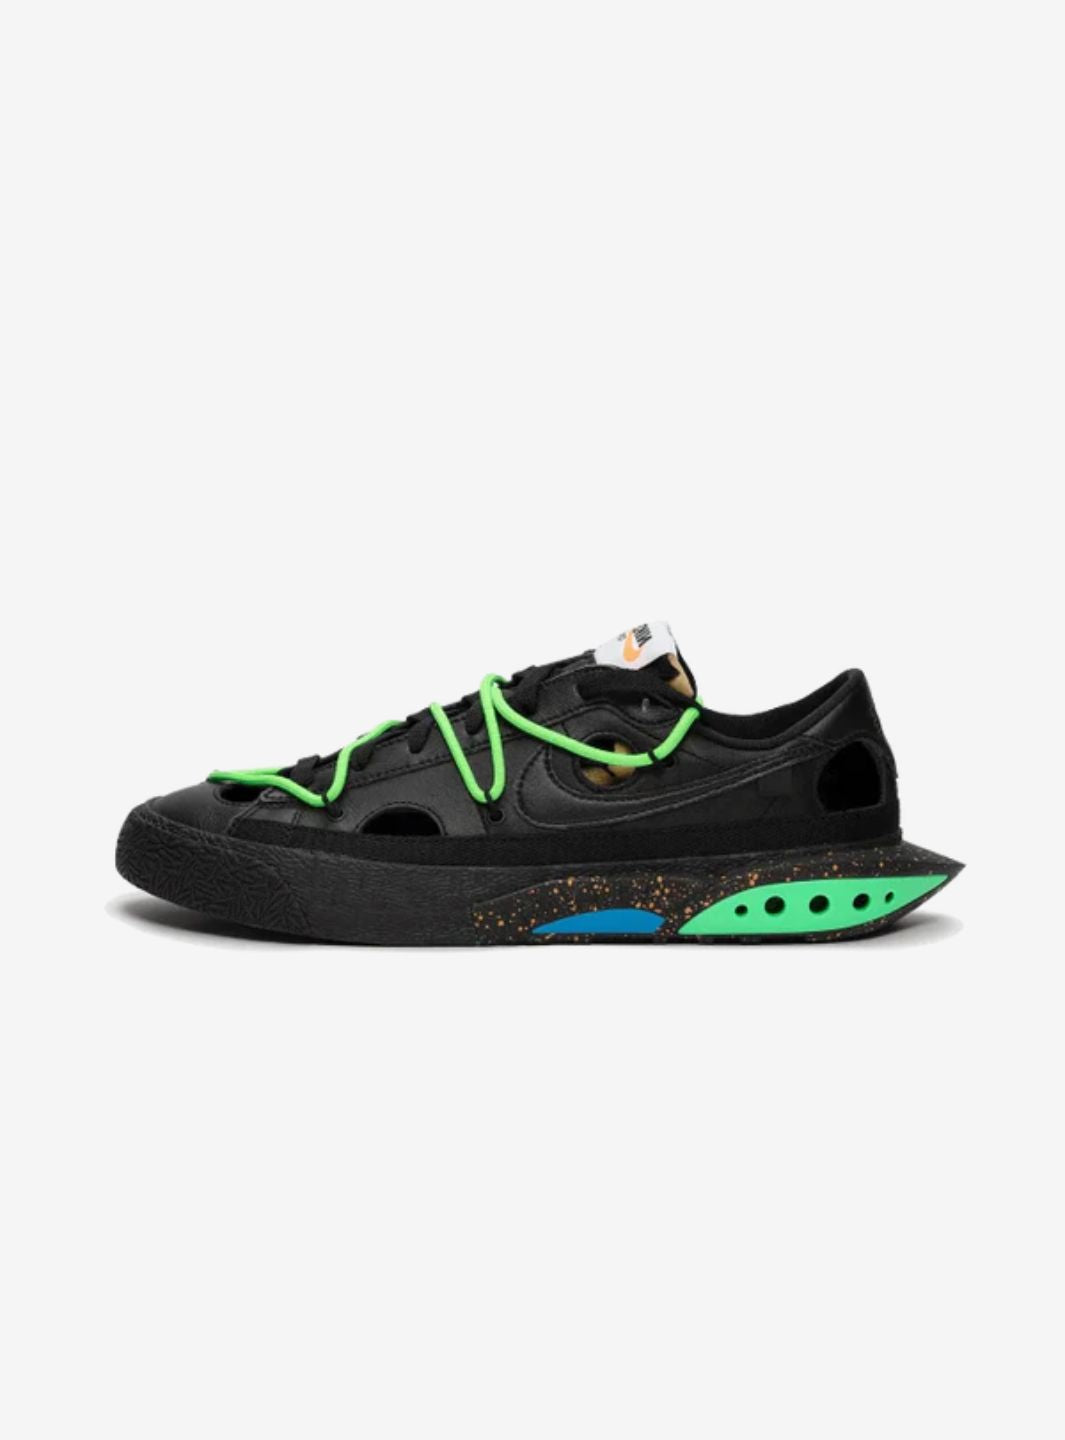 Nike Blazer Low Off-White Black Electro Green - DH7863-001 | ResellZone